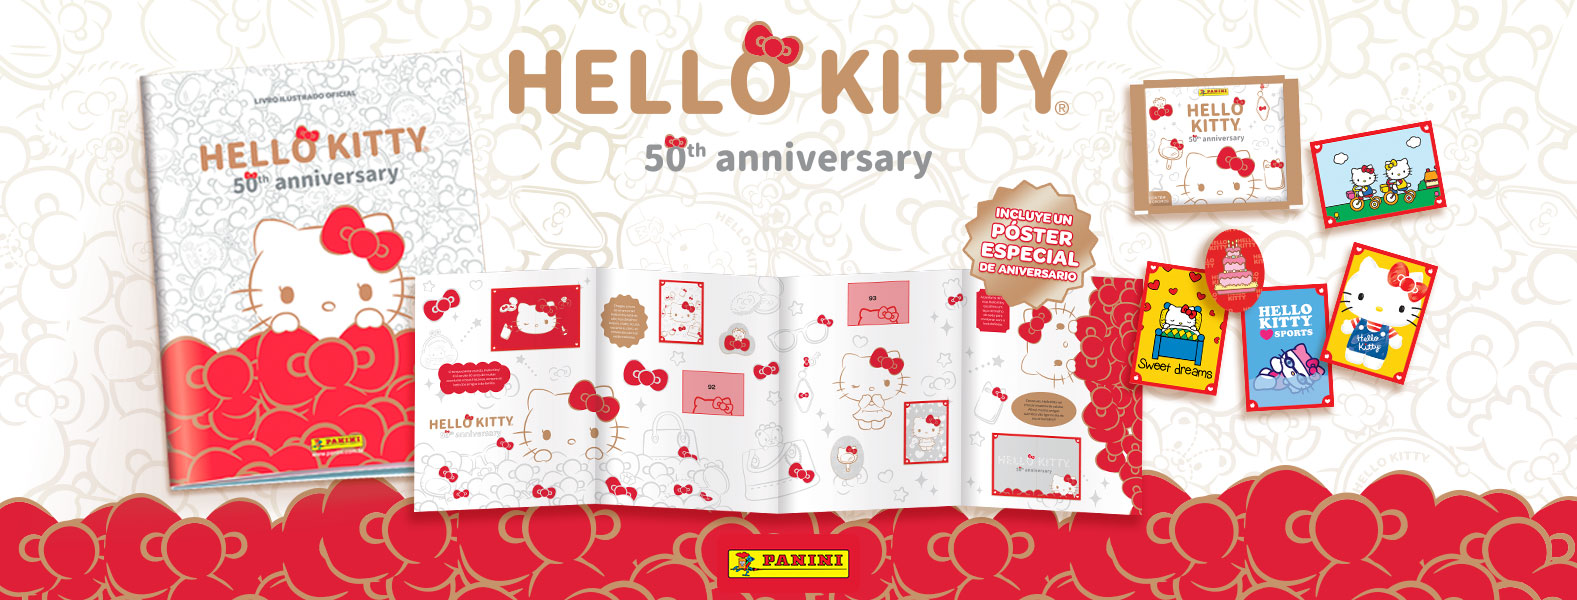 Hello Kitty 50 Anniversary